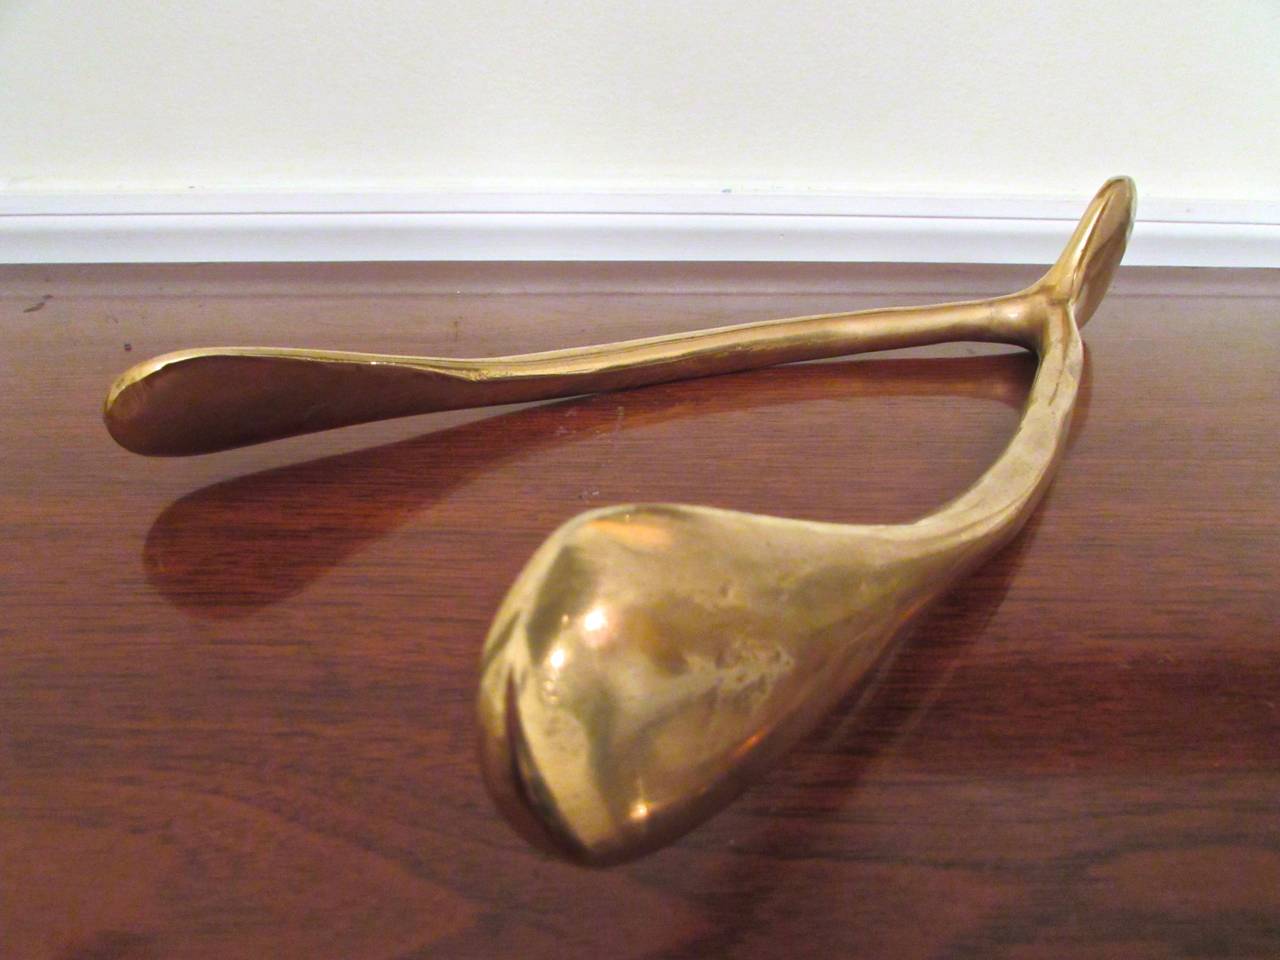 Hollywood Regency Massive Anatomical Brass Wishbone Objet or Paperweight, Carl Auböck Style